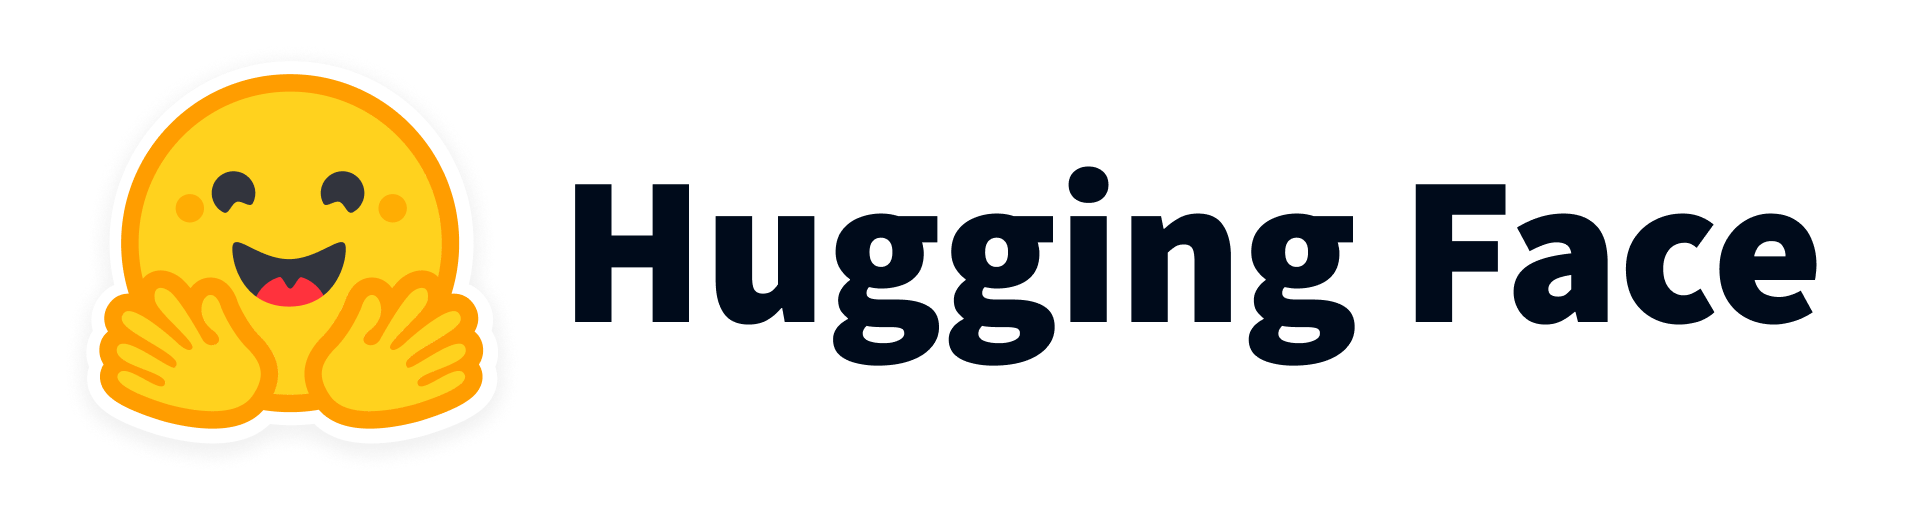 logotipo de Hugging Face